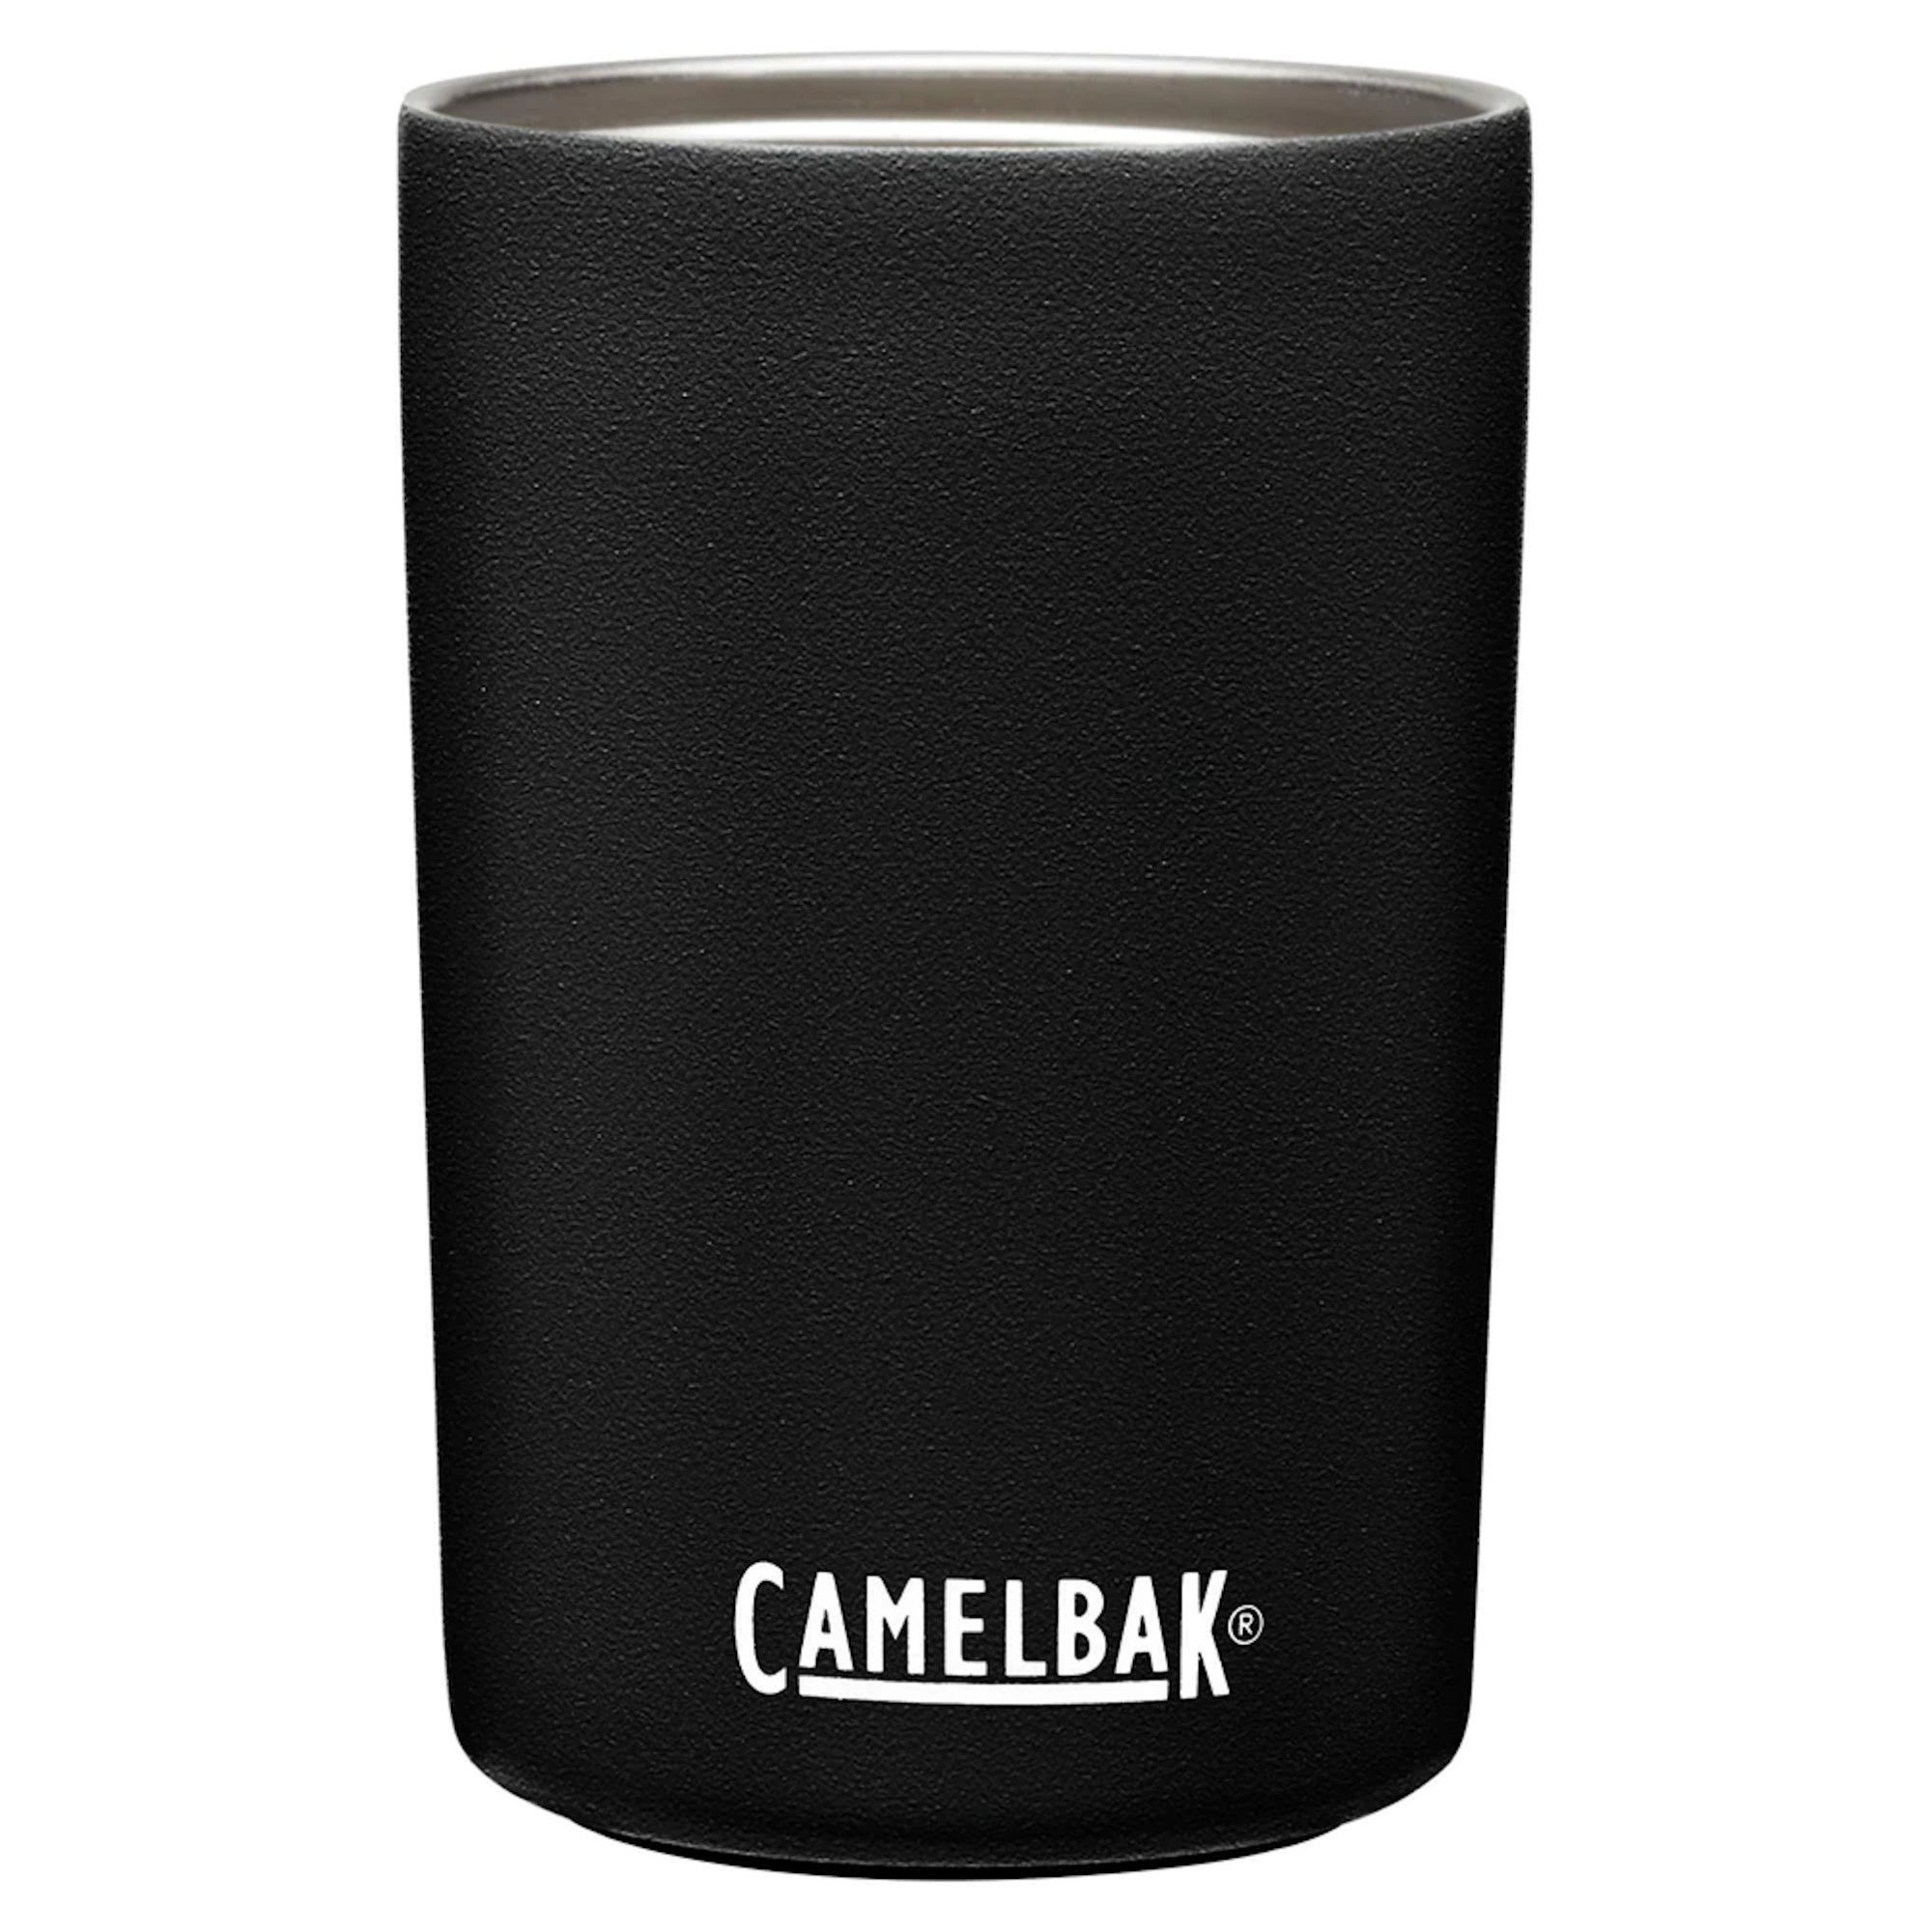 Camelbak Thermoflasche MultiBev isolierte Edelstahl düne Trinkflasche Trinkbecher Thermosbecher